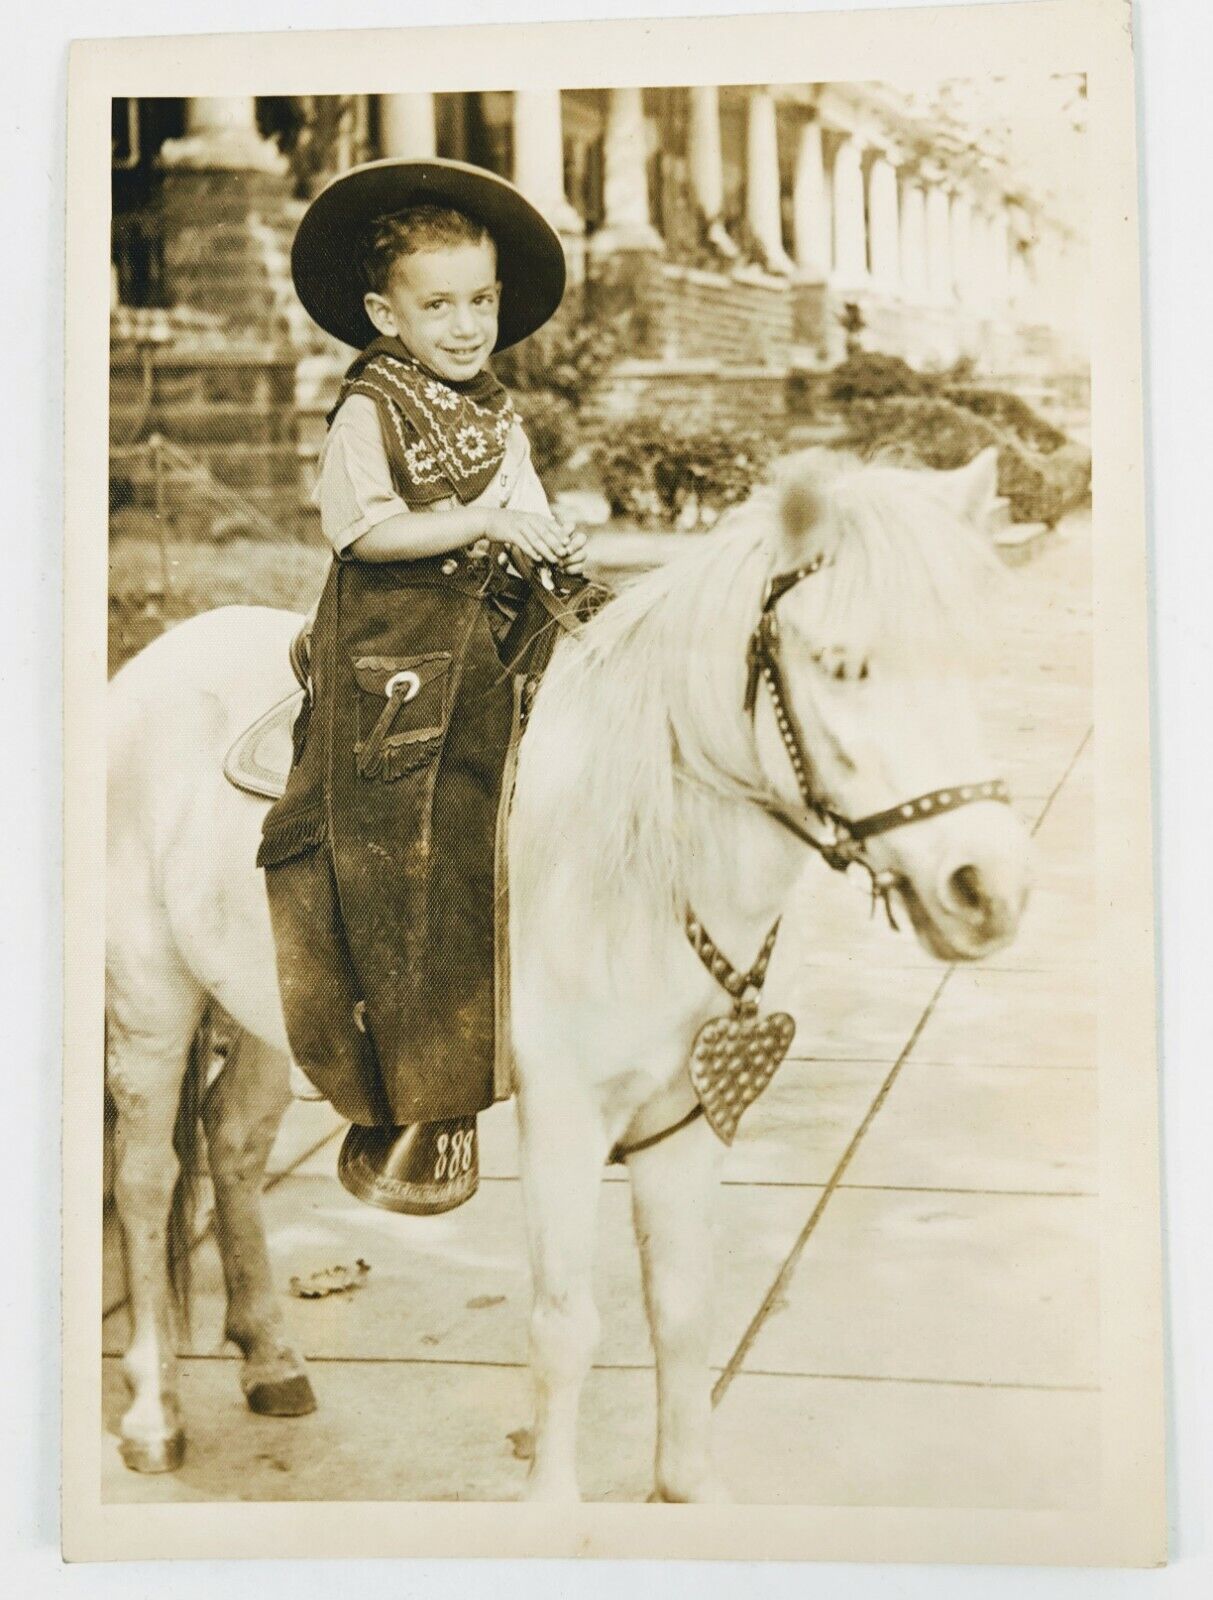 Old B&W Photo Cowboy Kid Boy Donkey Small Horse Birthday Party 5x7